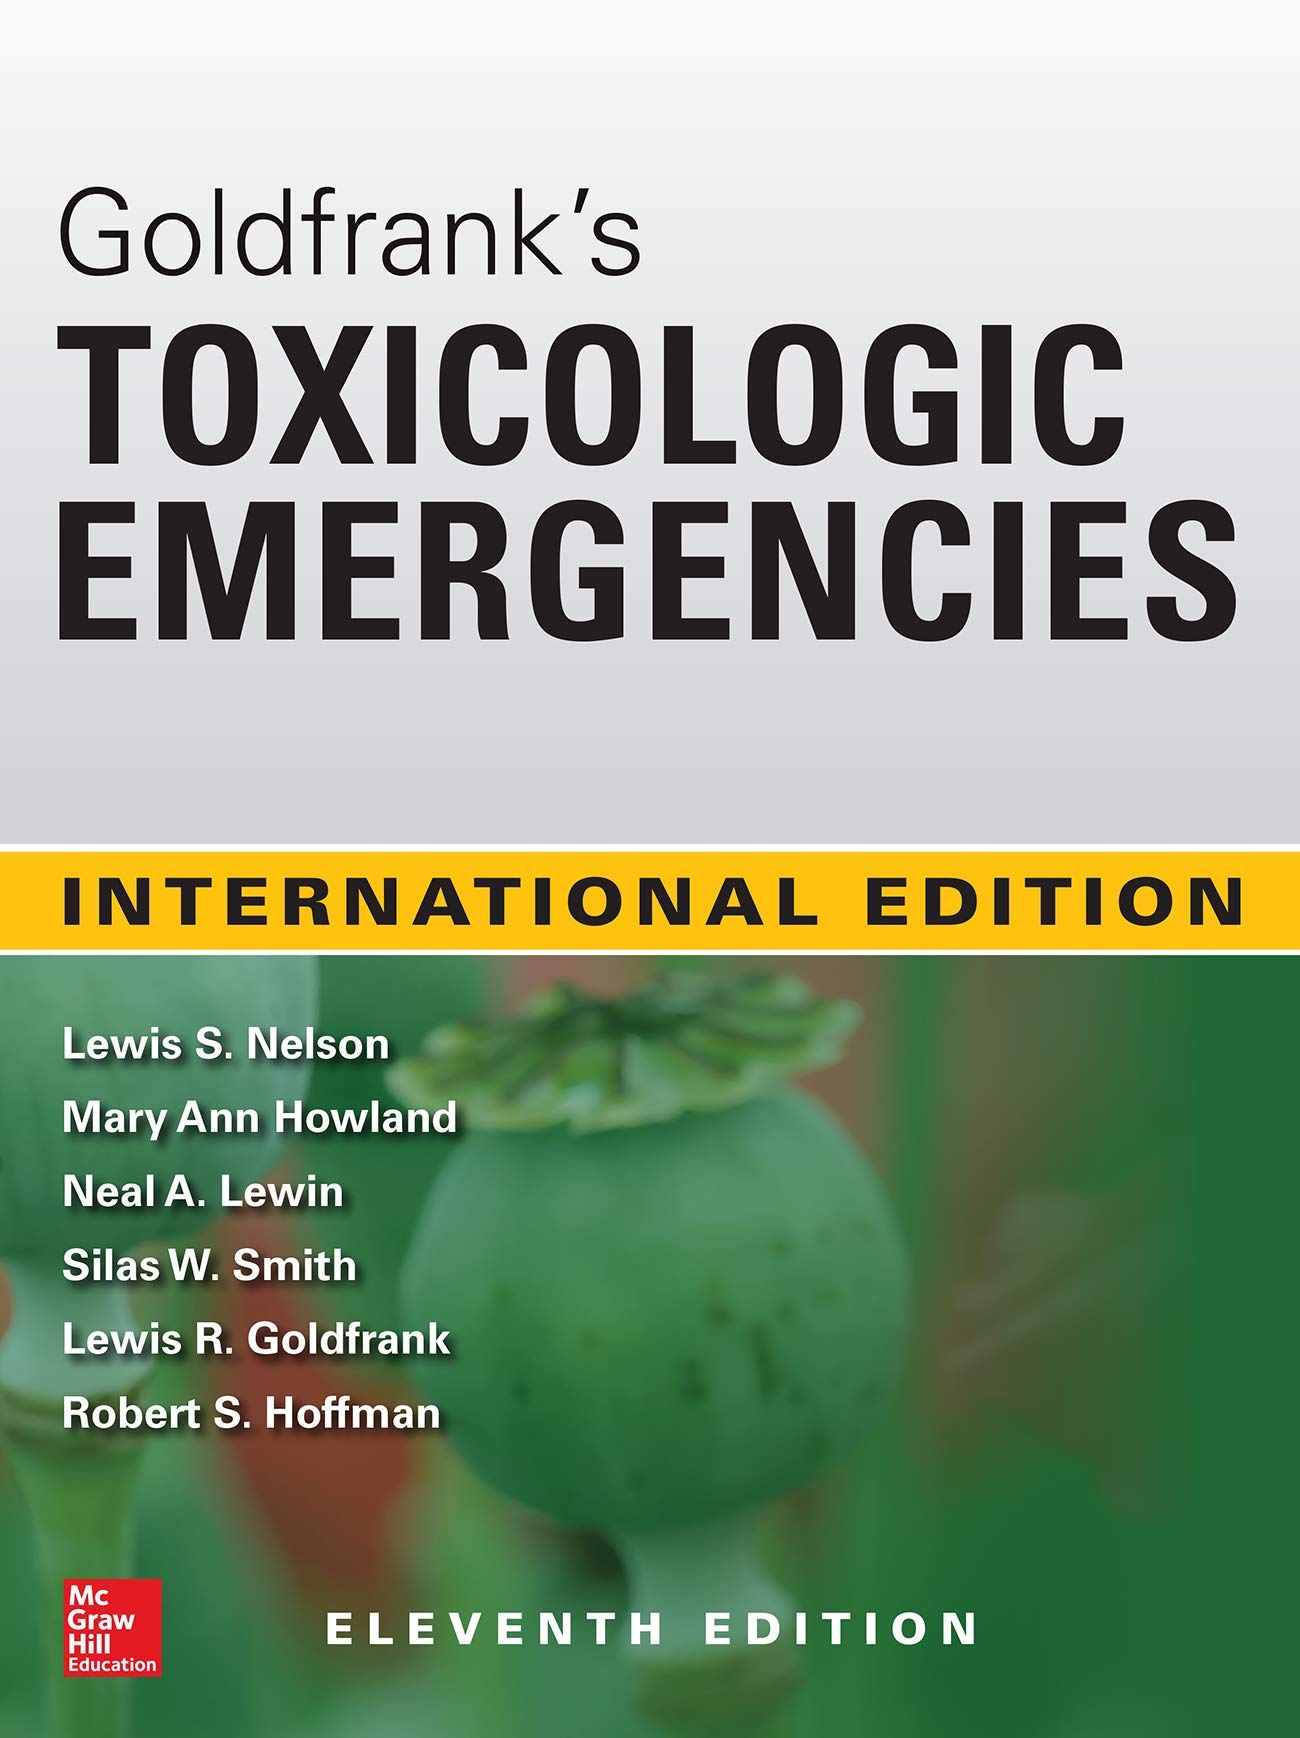 goldfranks-toxicologic-emergencies